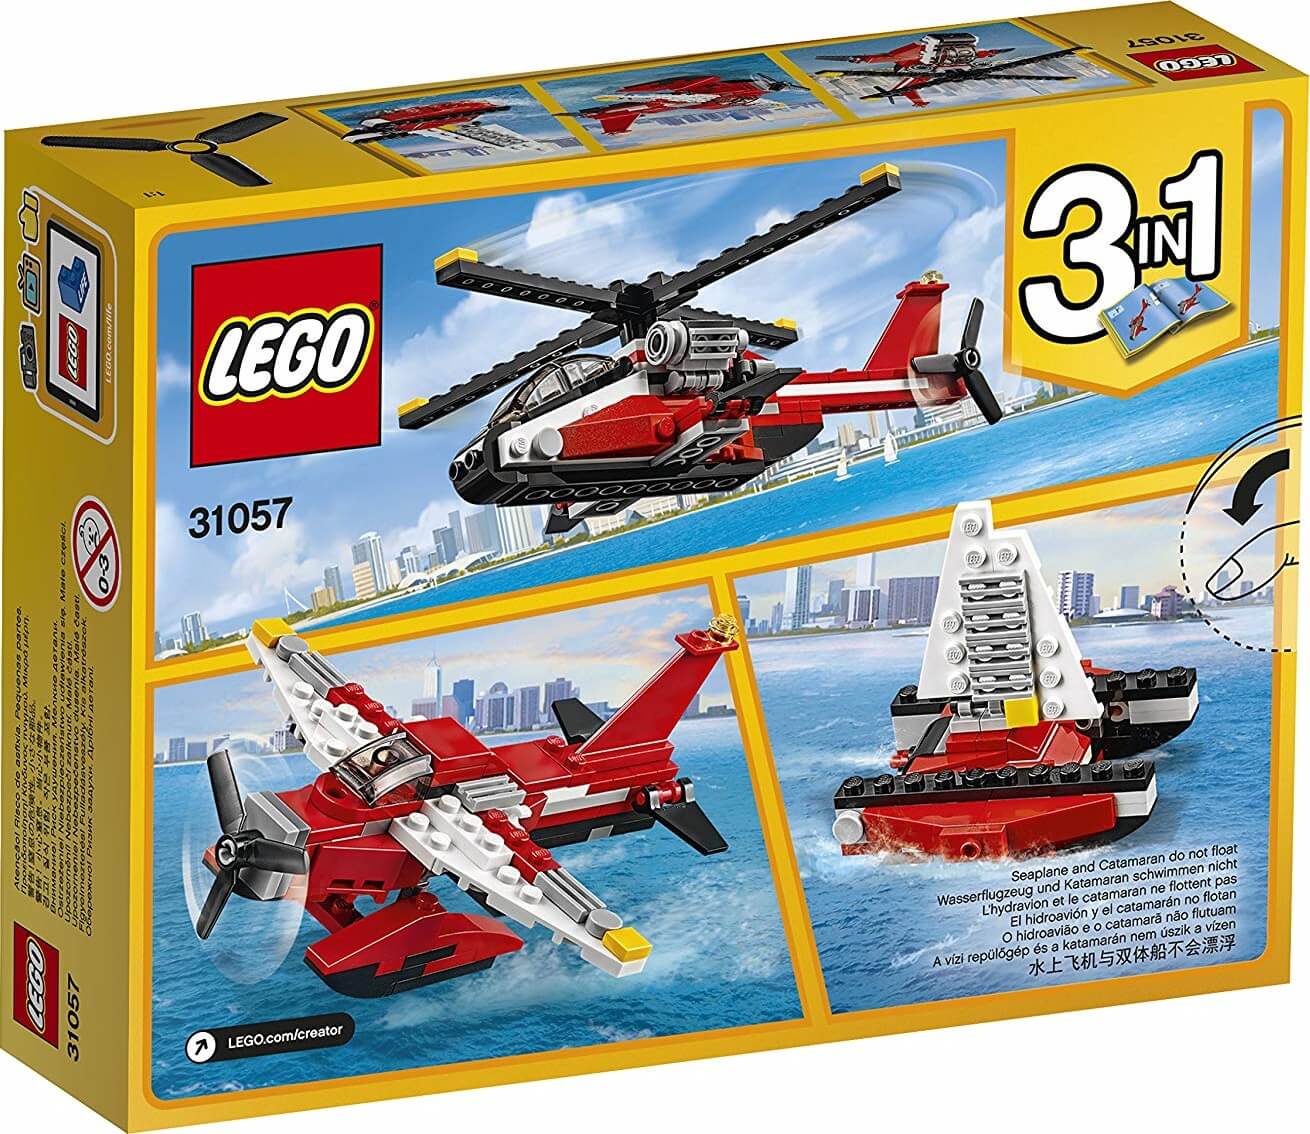 Estrella aerea ( Lego 31057 ) imagen d